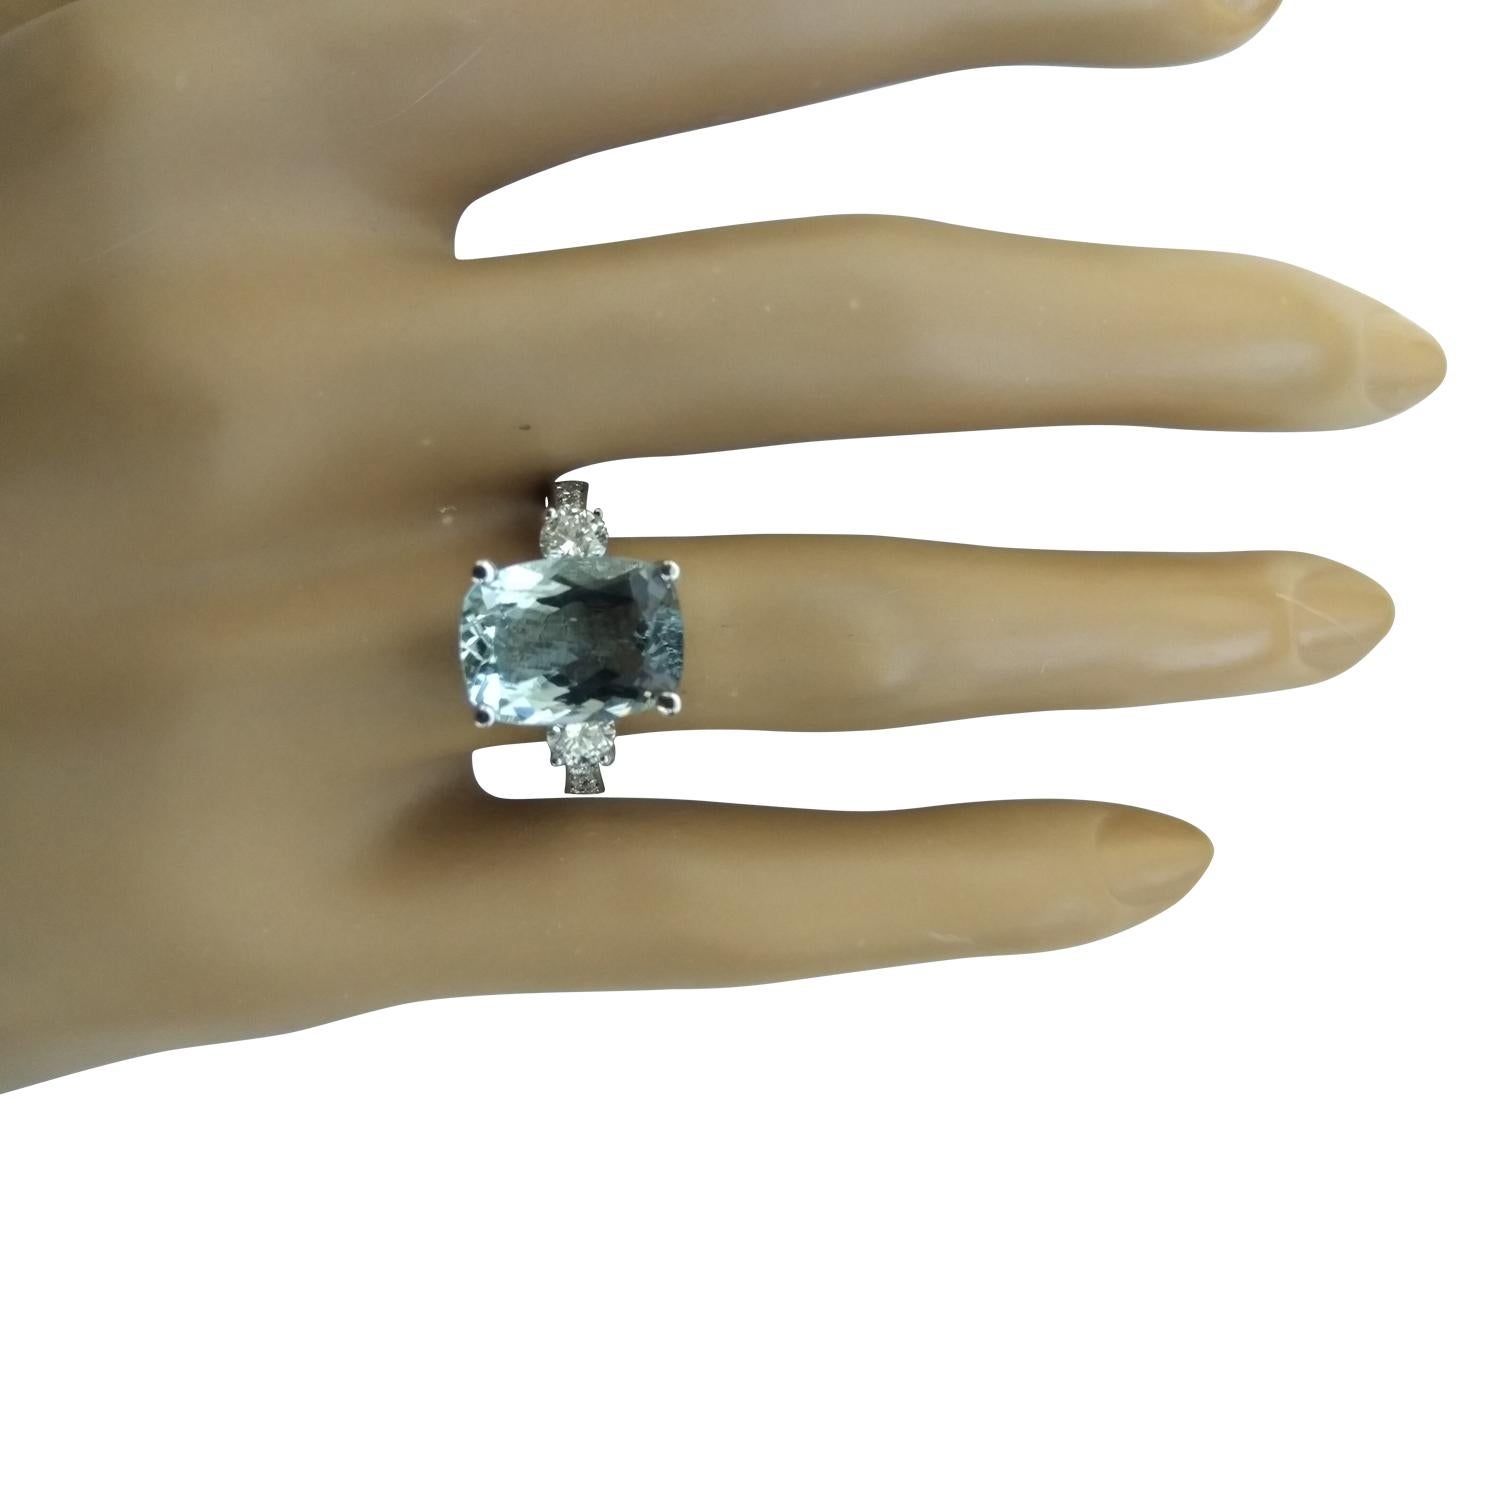 4.75 Carat Natural Aquamarine 14 Karat Solid White Gold Diamond Ring
Stamped: 14K 
Total Ring Weight: 4.1 Grams 
Aquamarine Weight 4.15 Carat (11.00x9.00 Millimeters)
Color: Blue
Treatment: Heating
Diamond Weight: 0.60 Carat (F-G Color, VS2-SI1